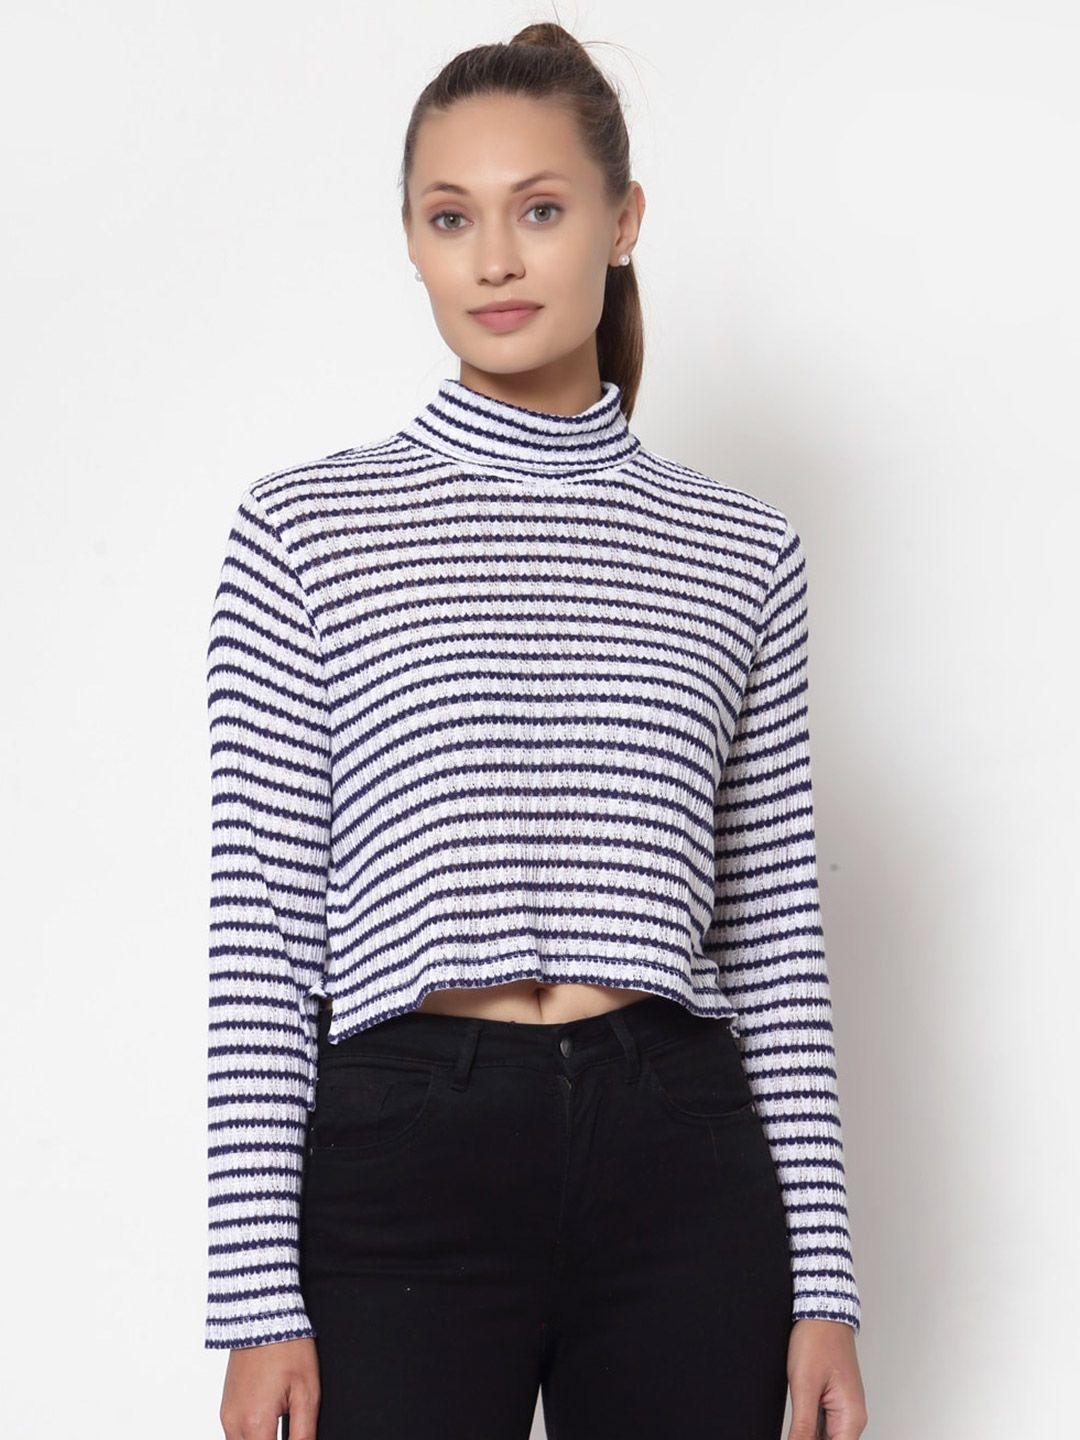 yoonoy white & navy blue striped crop top